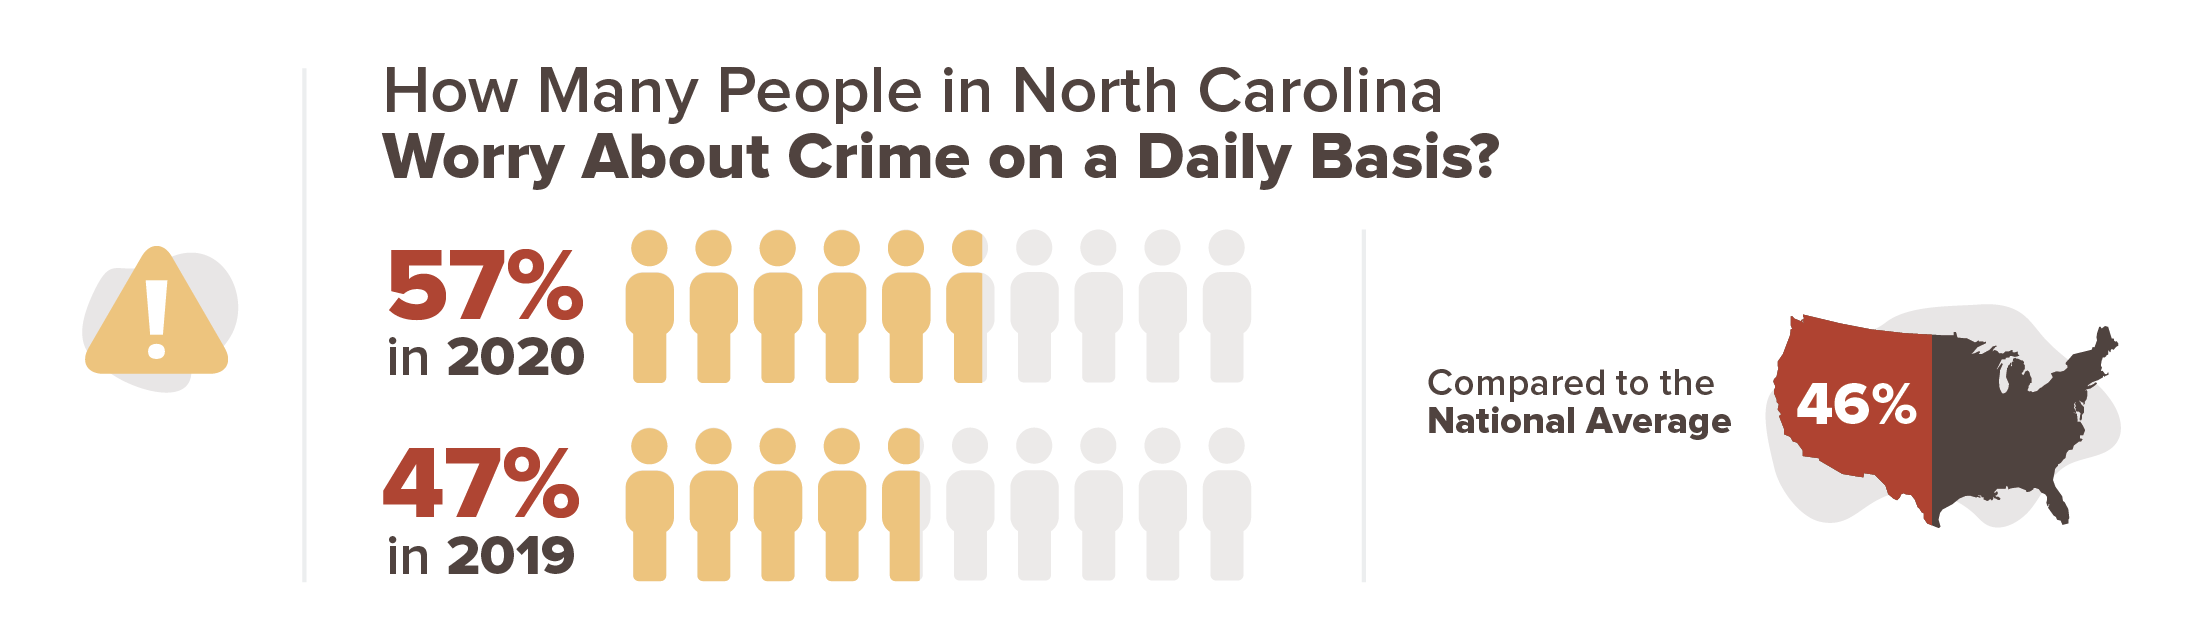 North Carolina crime stats infographic